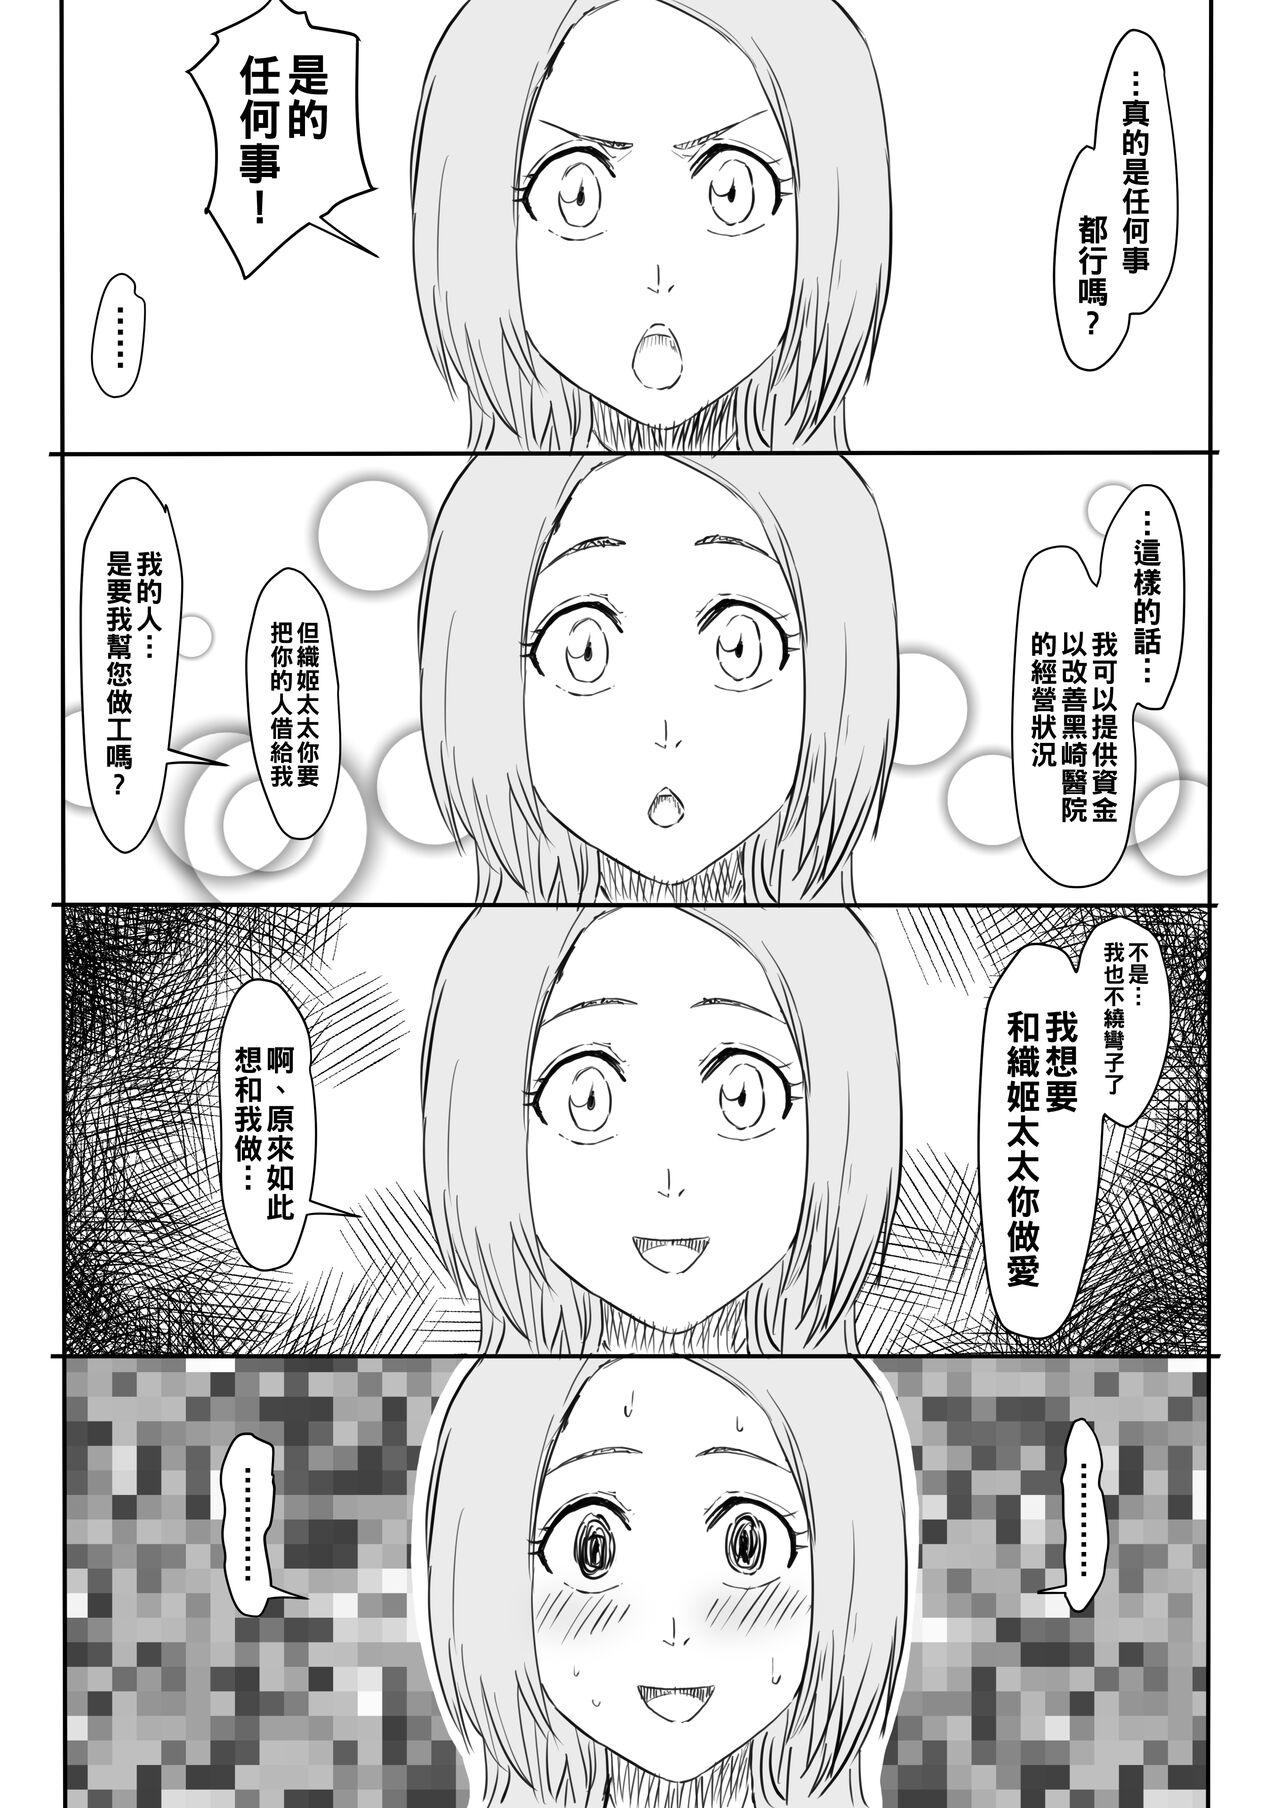 Pinoy Orihime Manga - Bleach Novia - Page 3